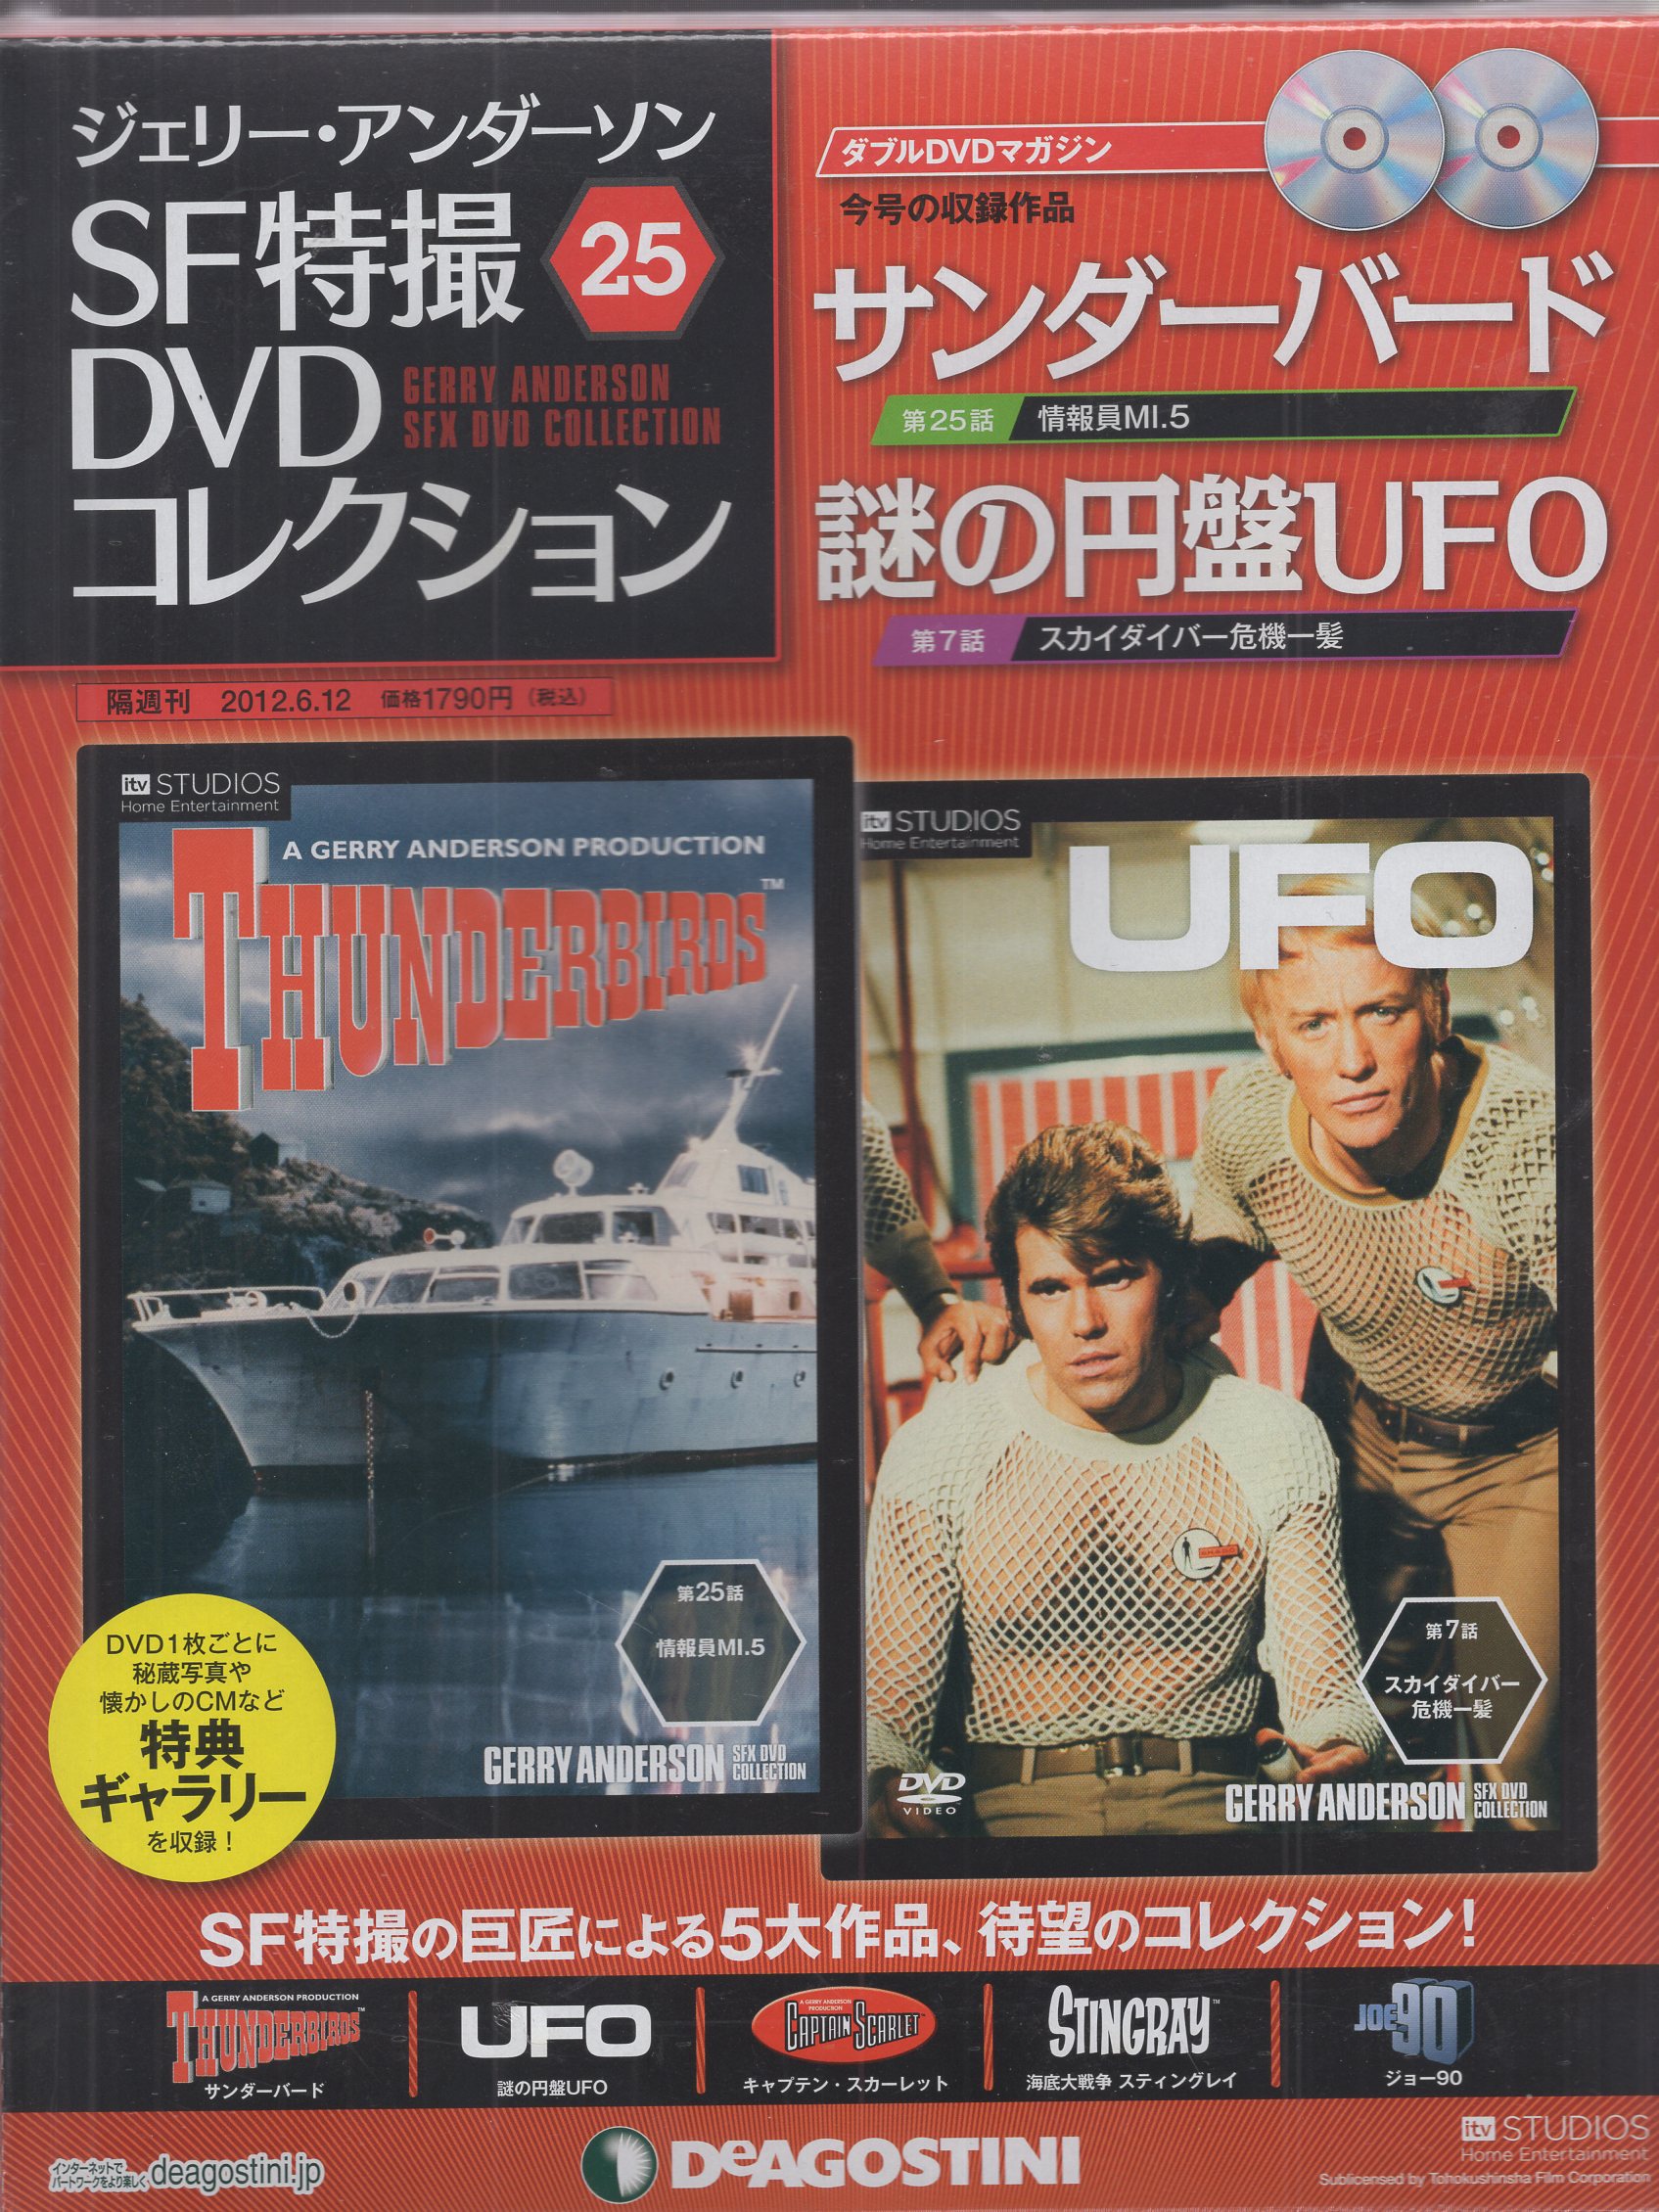 DVD ジェリー・アンダーソンSF特撮DVDコレクション 第１話 謎の円盤UFO